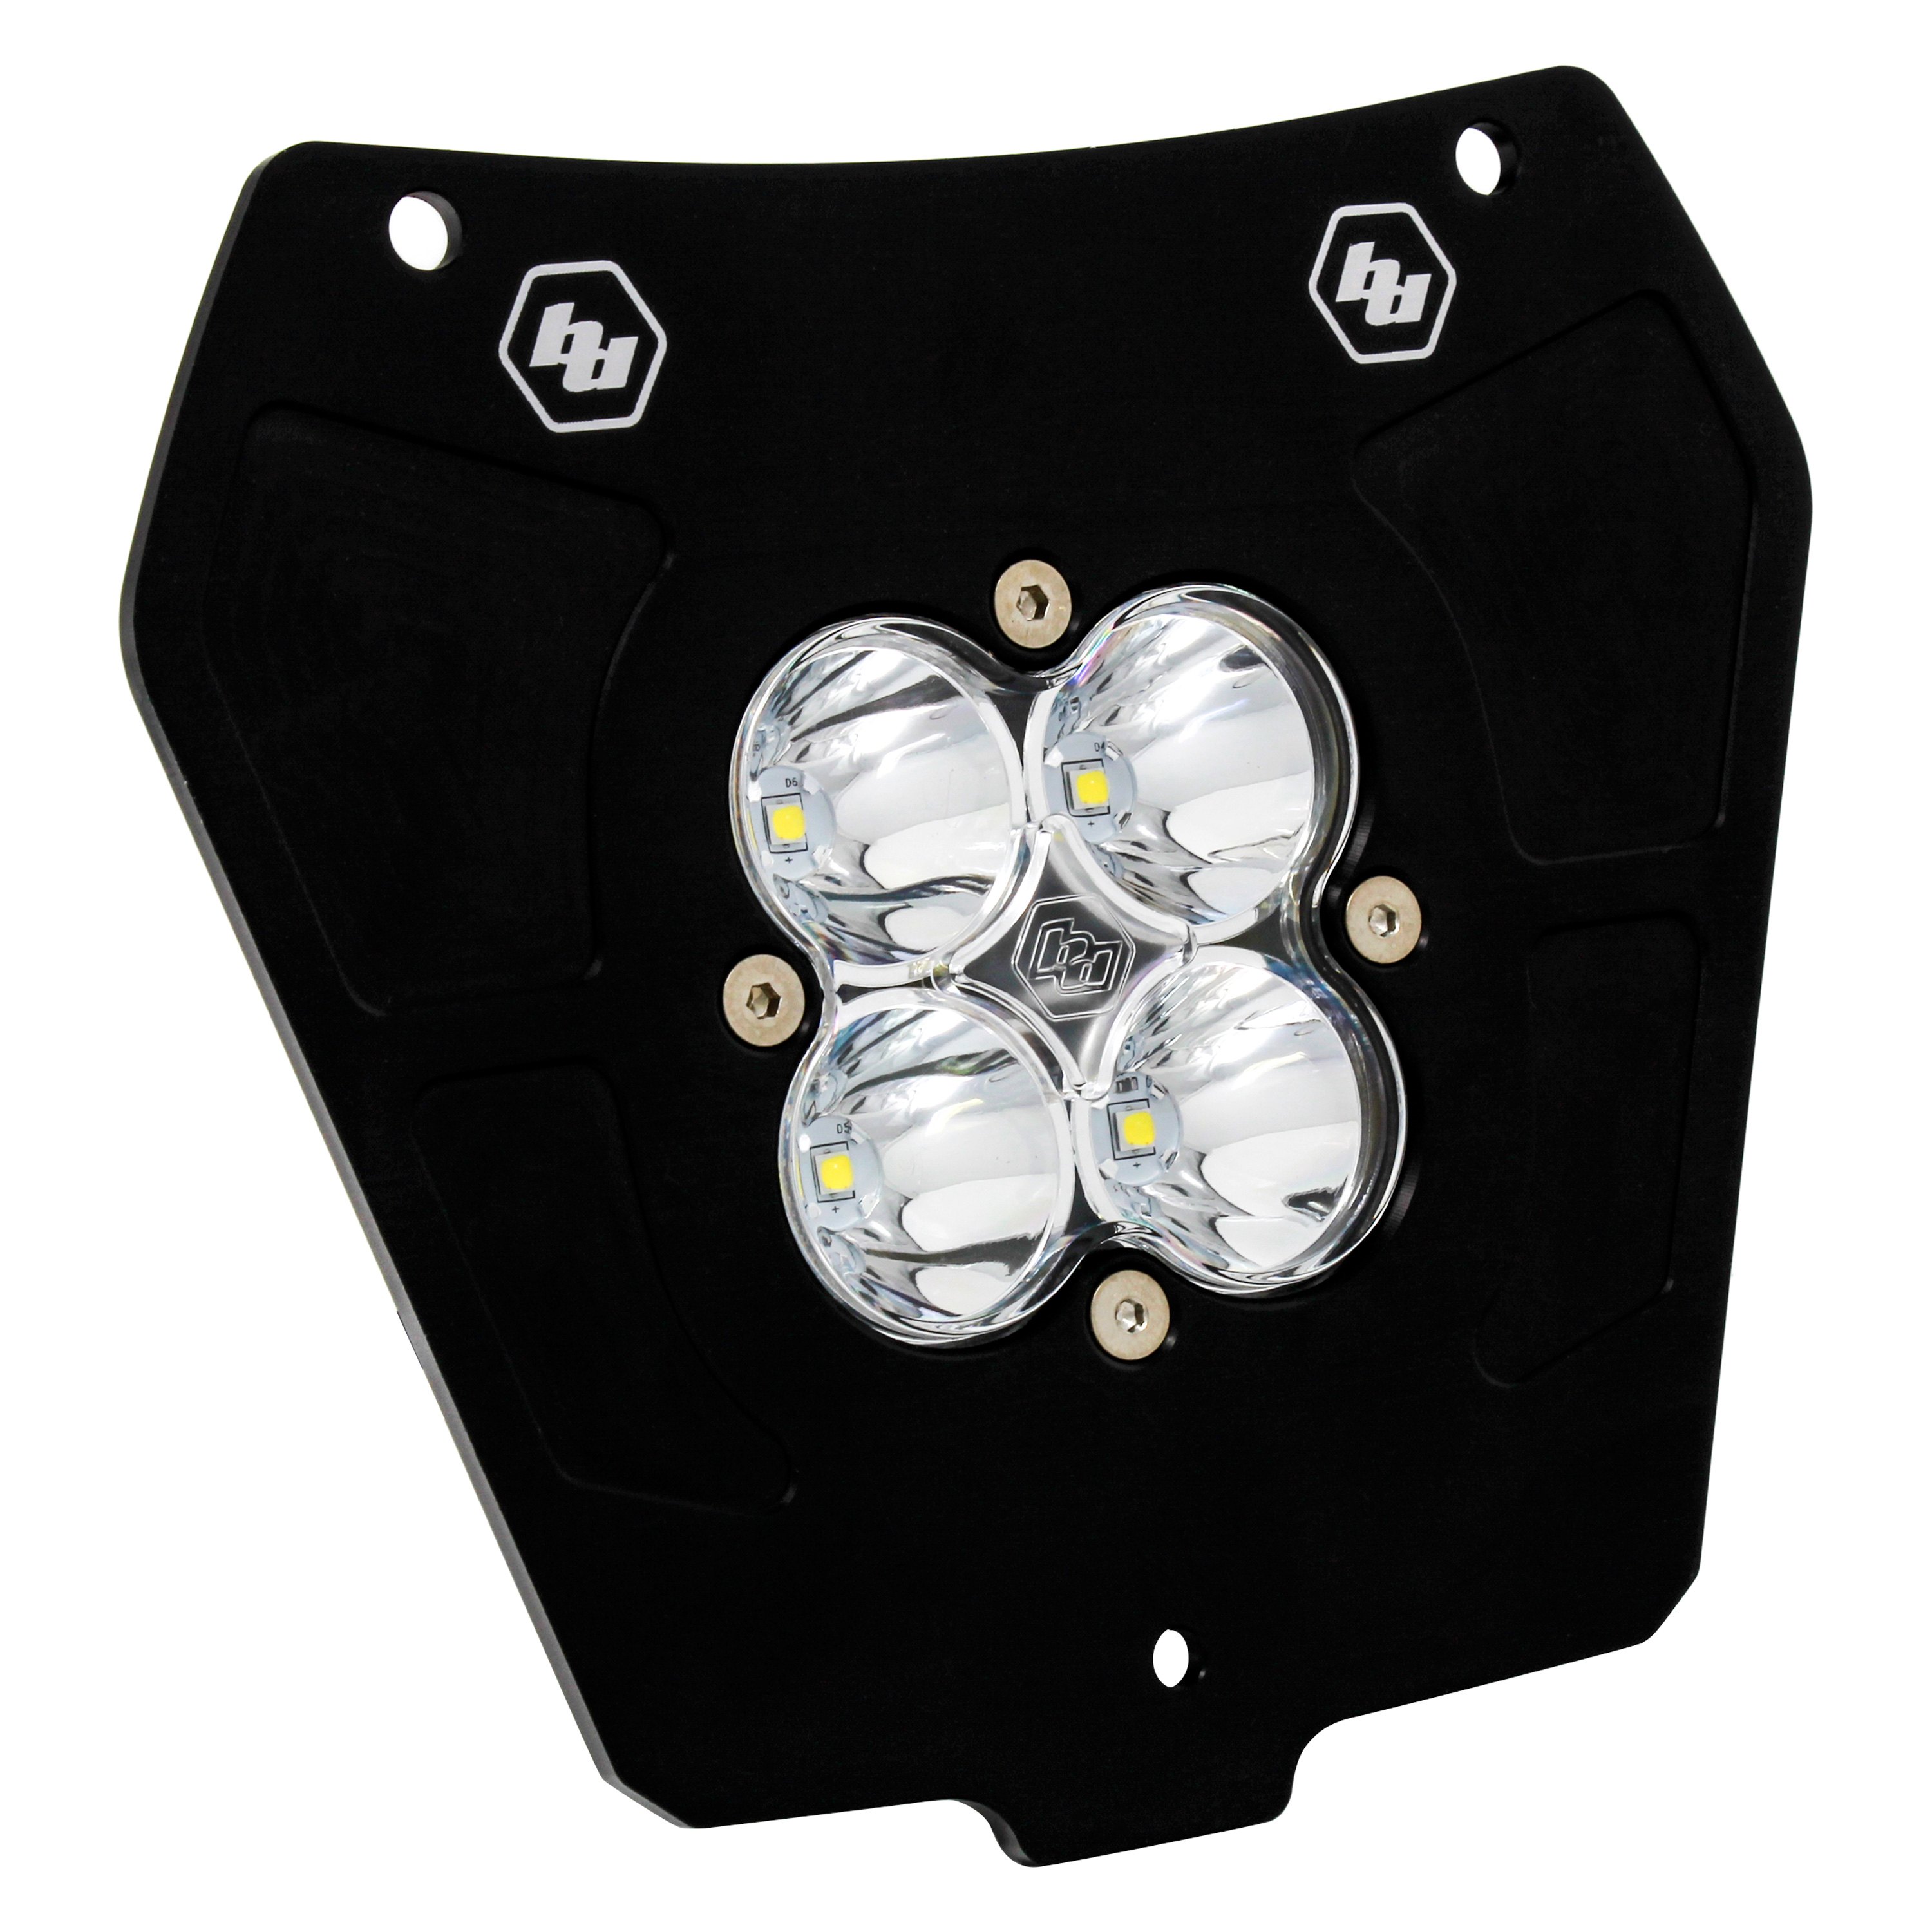 KTM 690R Enduro - LED Headlamp Kit Install, MotoMinded, Baja Designs  Squadron Pro LED 